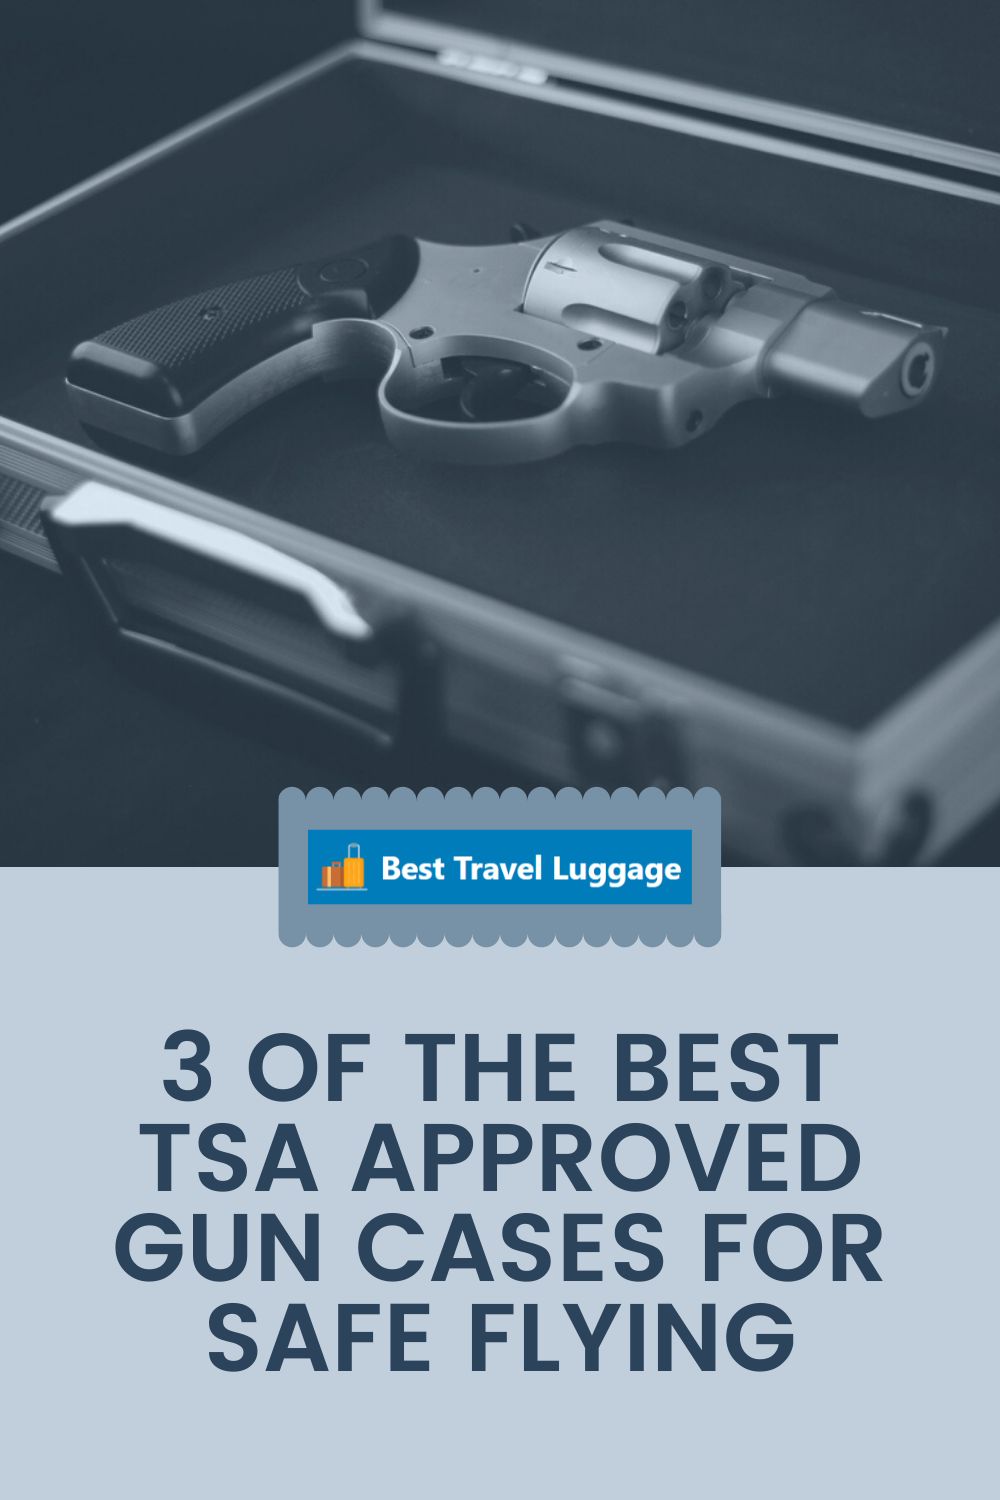 tsa approved gun cases pin2